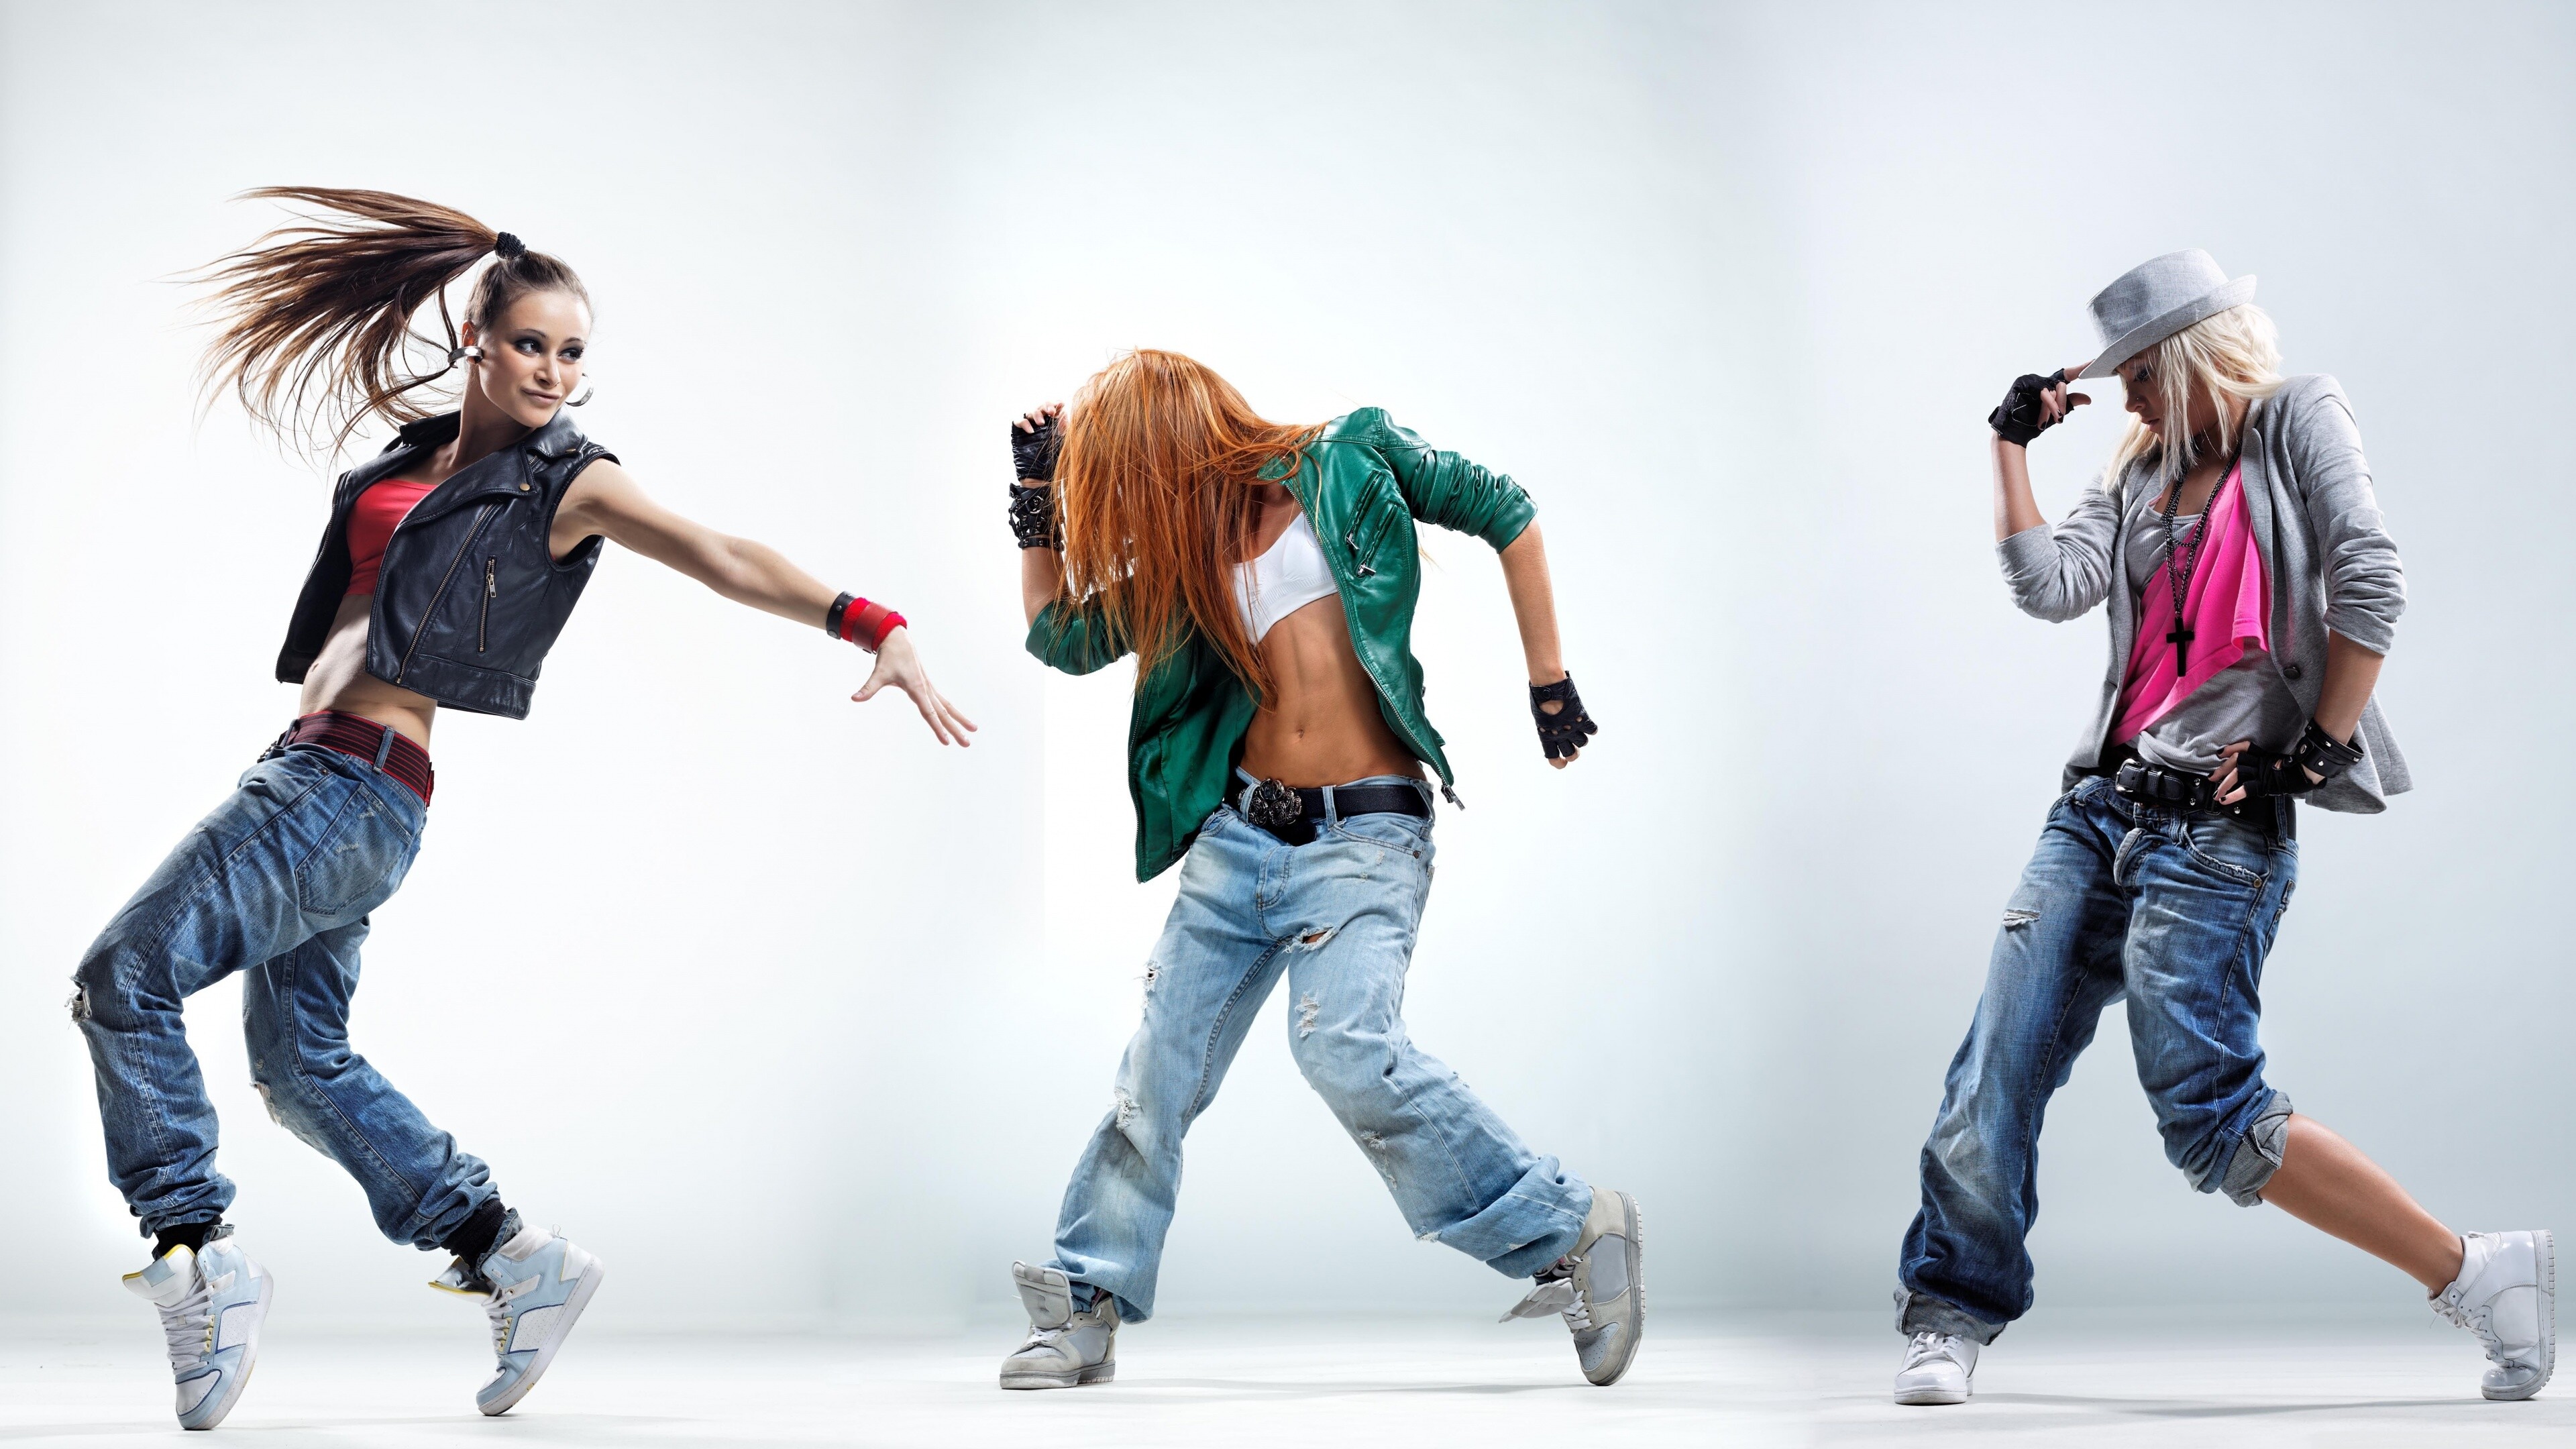 Dancers' grace, HD desktop backgrounds, Artistic expressions, Movement in focus, 3840x2160 4K Desktop